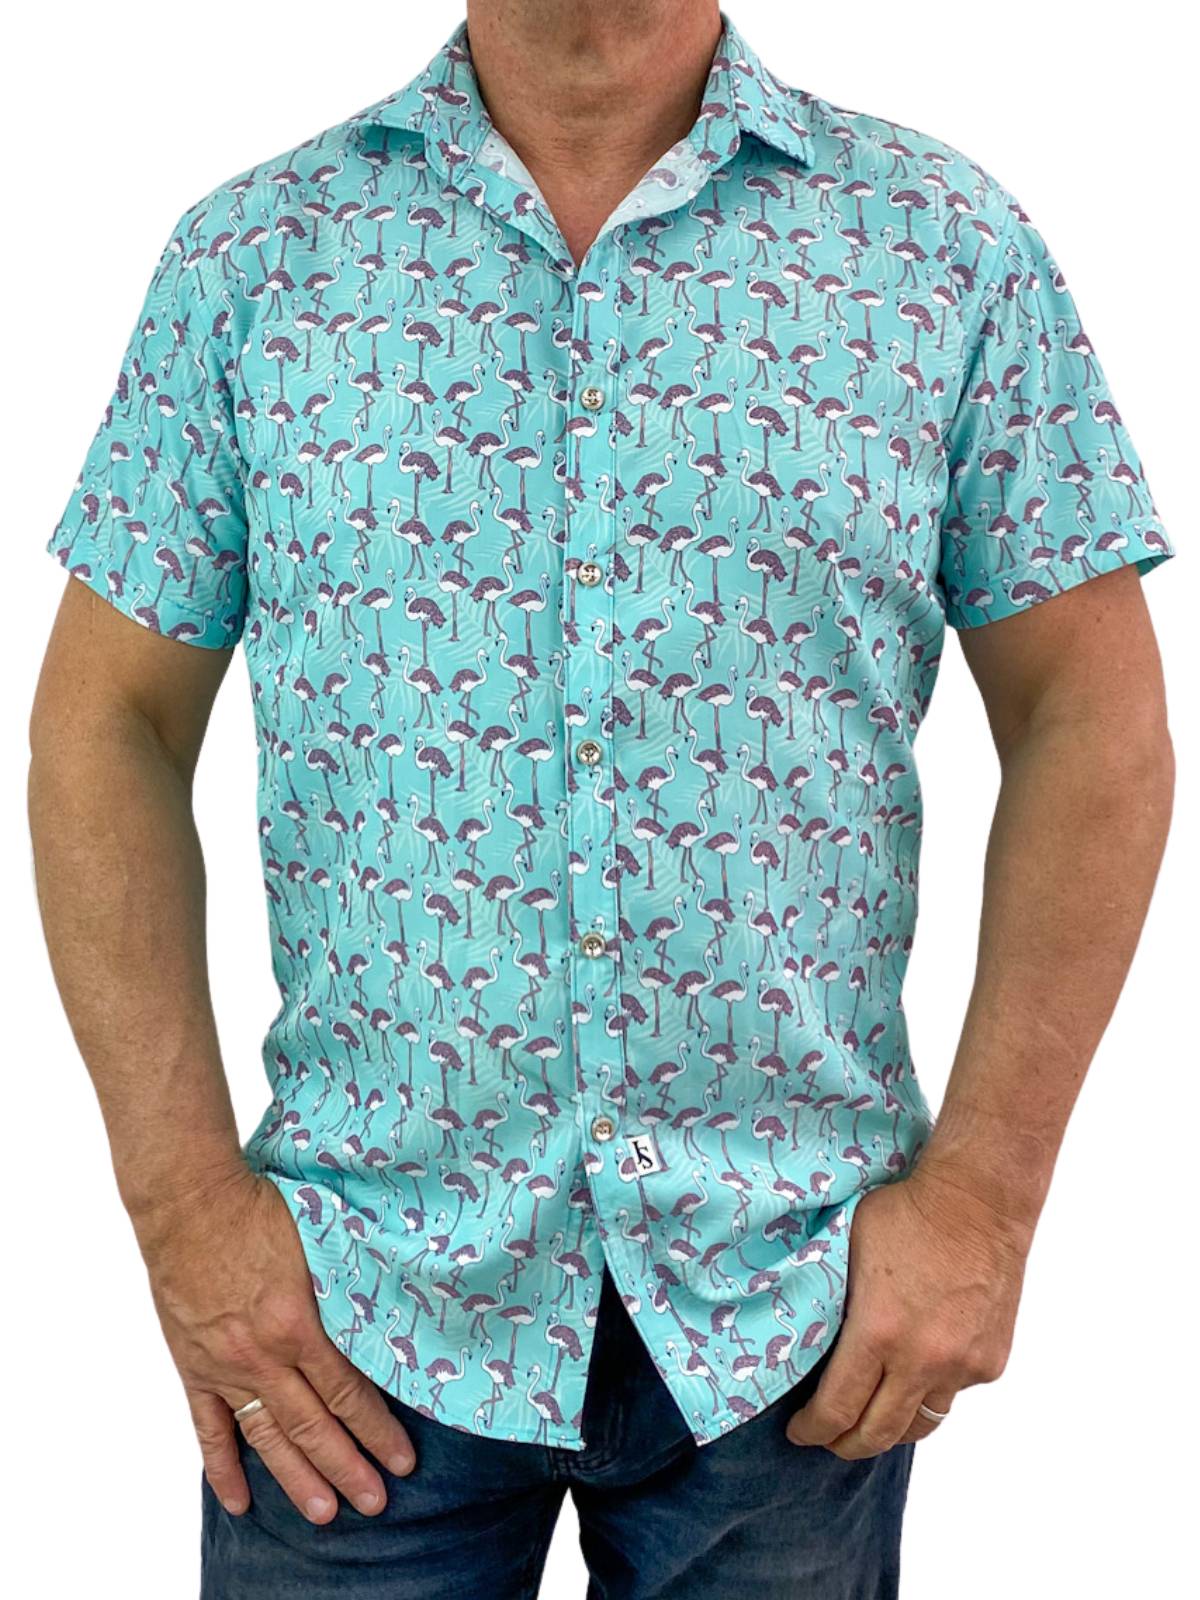 Sway Abstract Cotton/Rayon S/S Big Mens Shirt - Blue/Pink